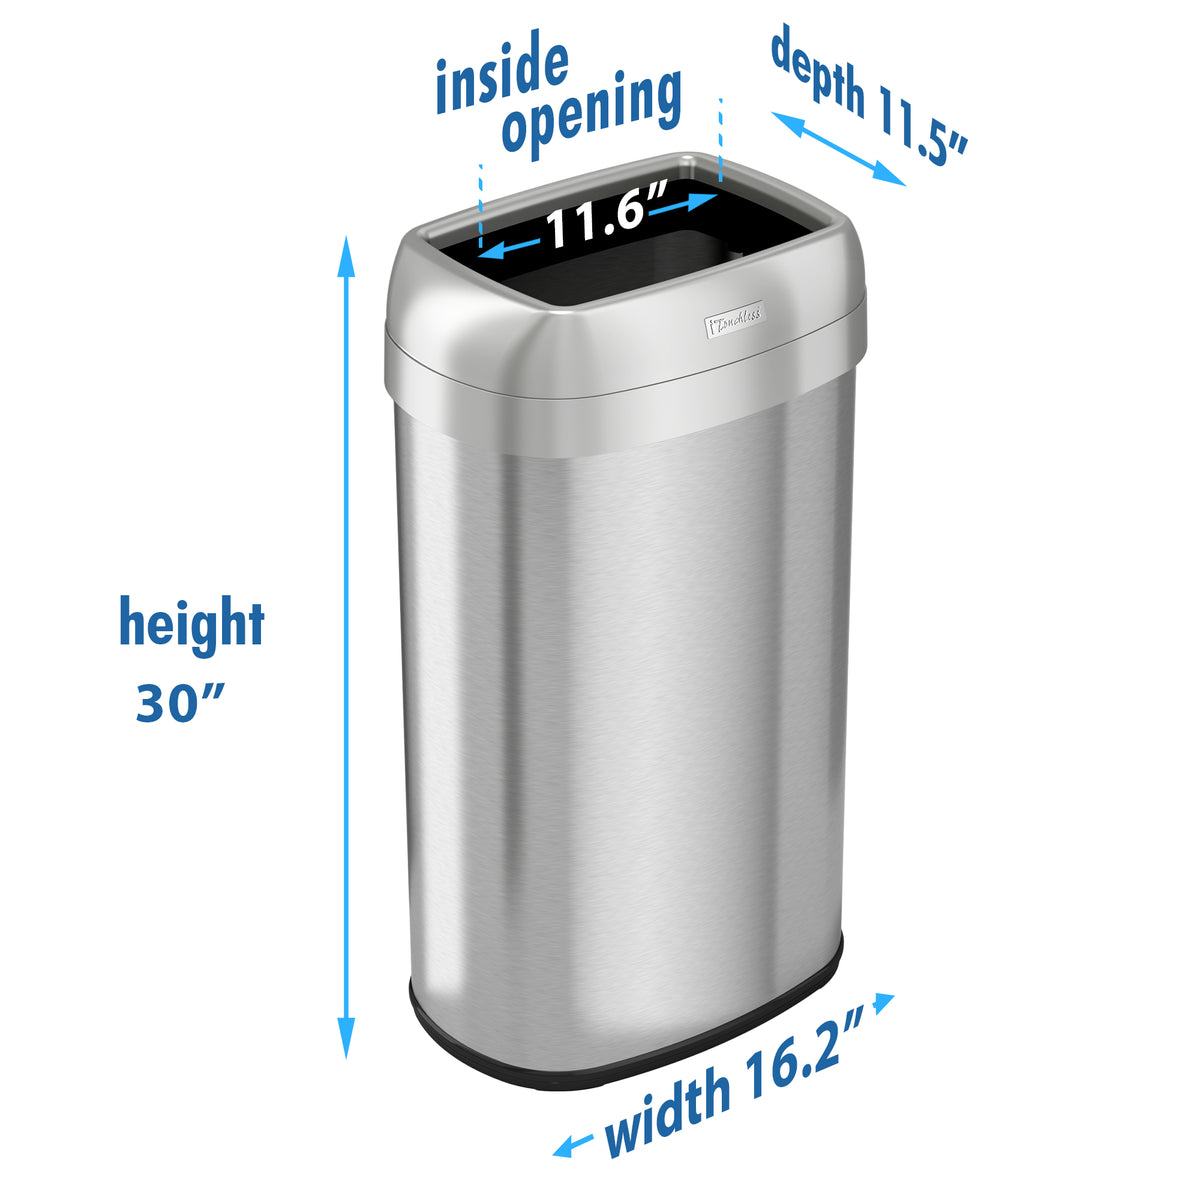 16 Gallon / 60 Liter Elliptical Open Top Trash Can dimensions